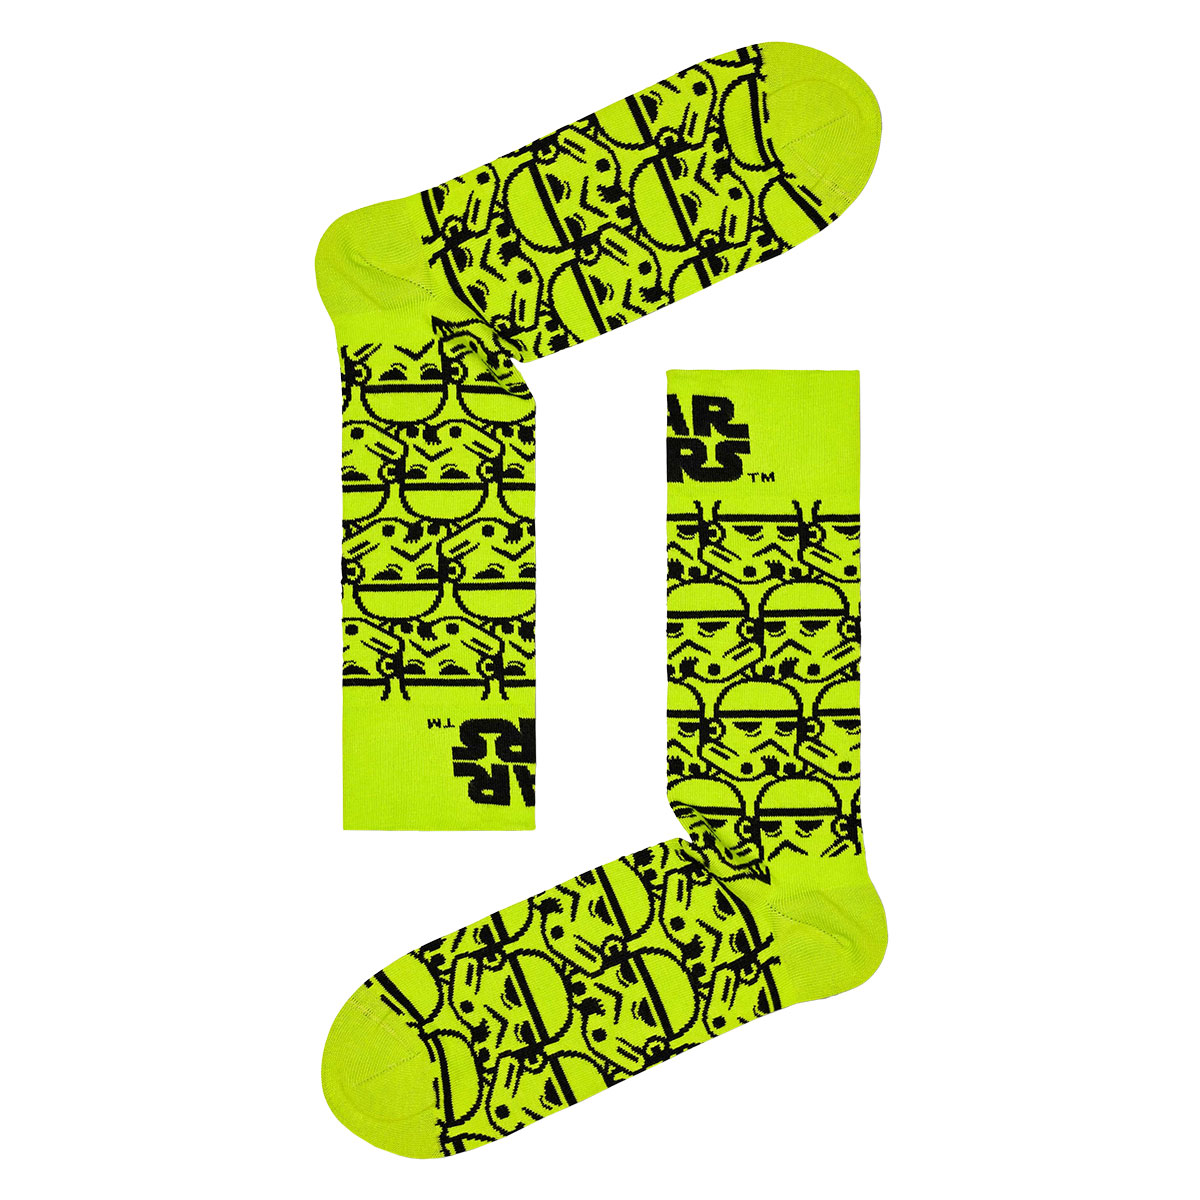 【23FW コラボ】 【Limited】 Happy Socks×Star Wars(スターウォーズ) Storm TrooPer Sock ストームトルーパー クルー丈 ソックス 靴下 ユニセックス メンズ ＆ レディース